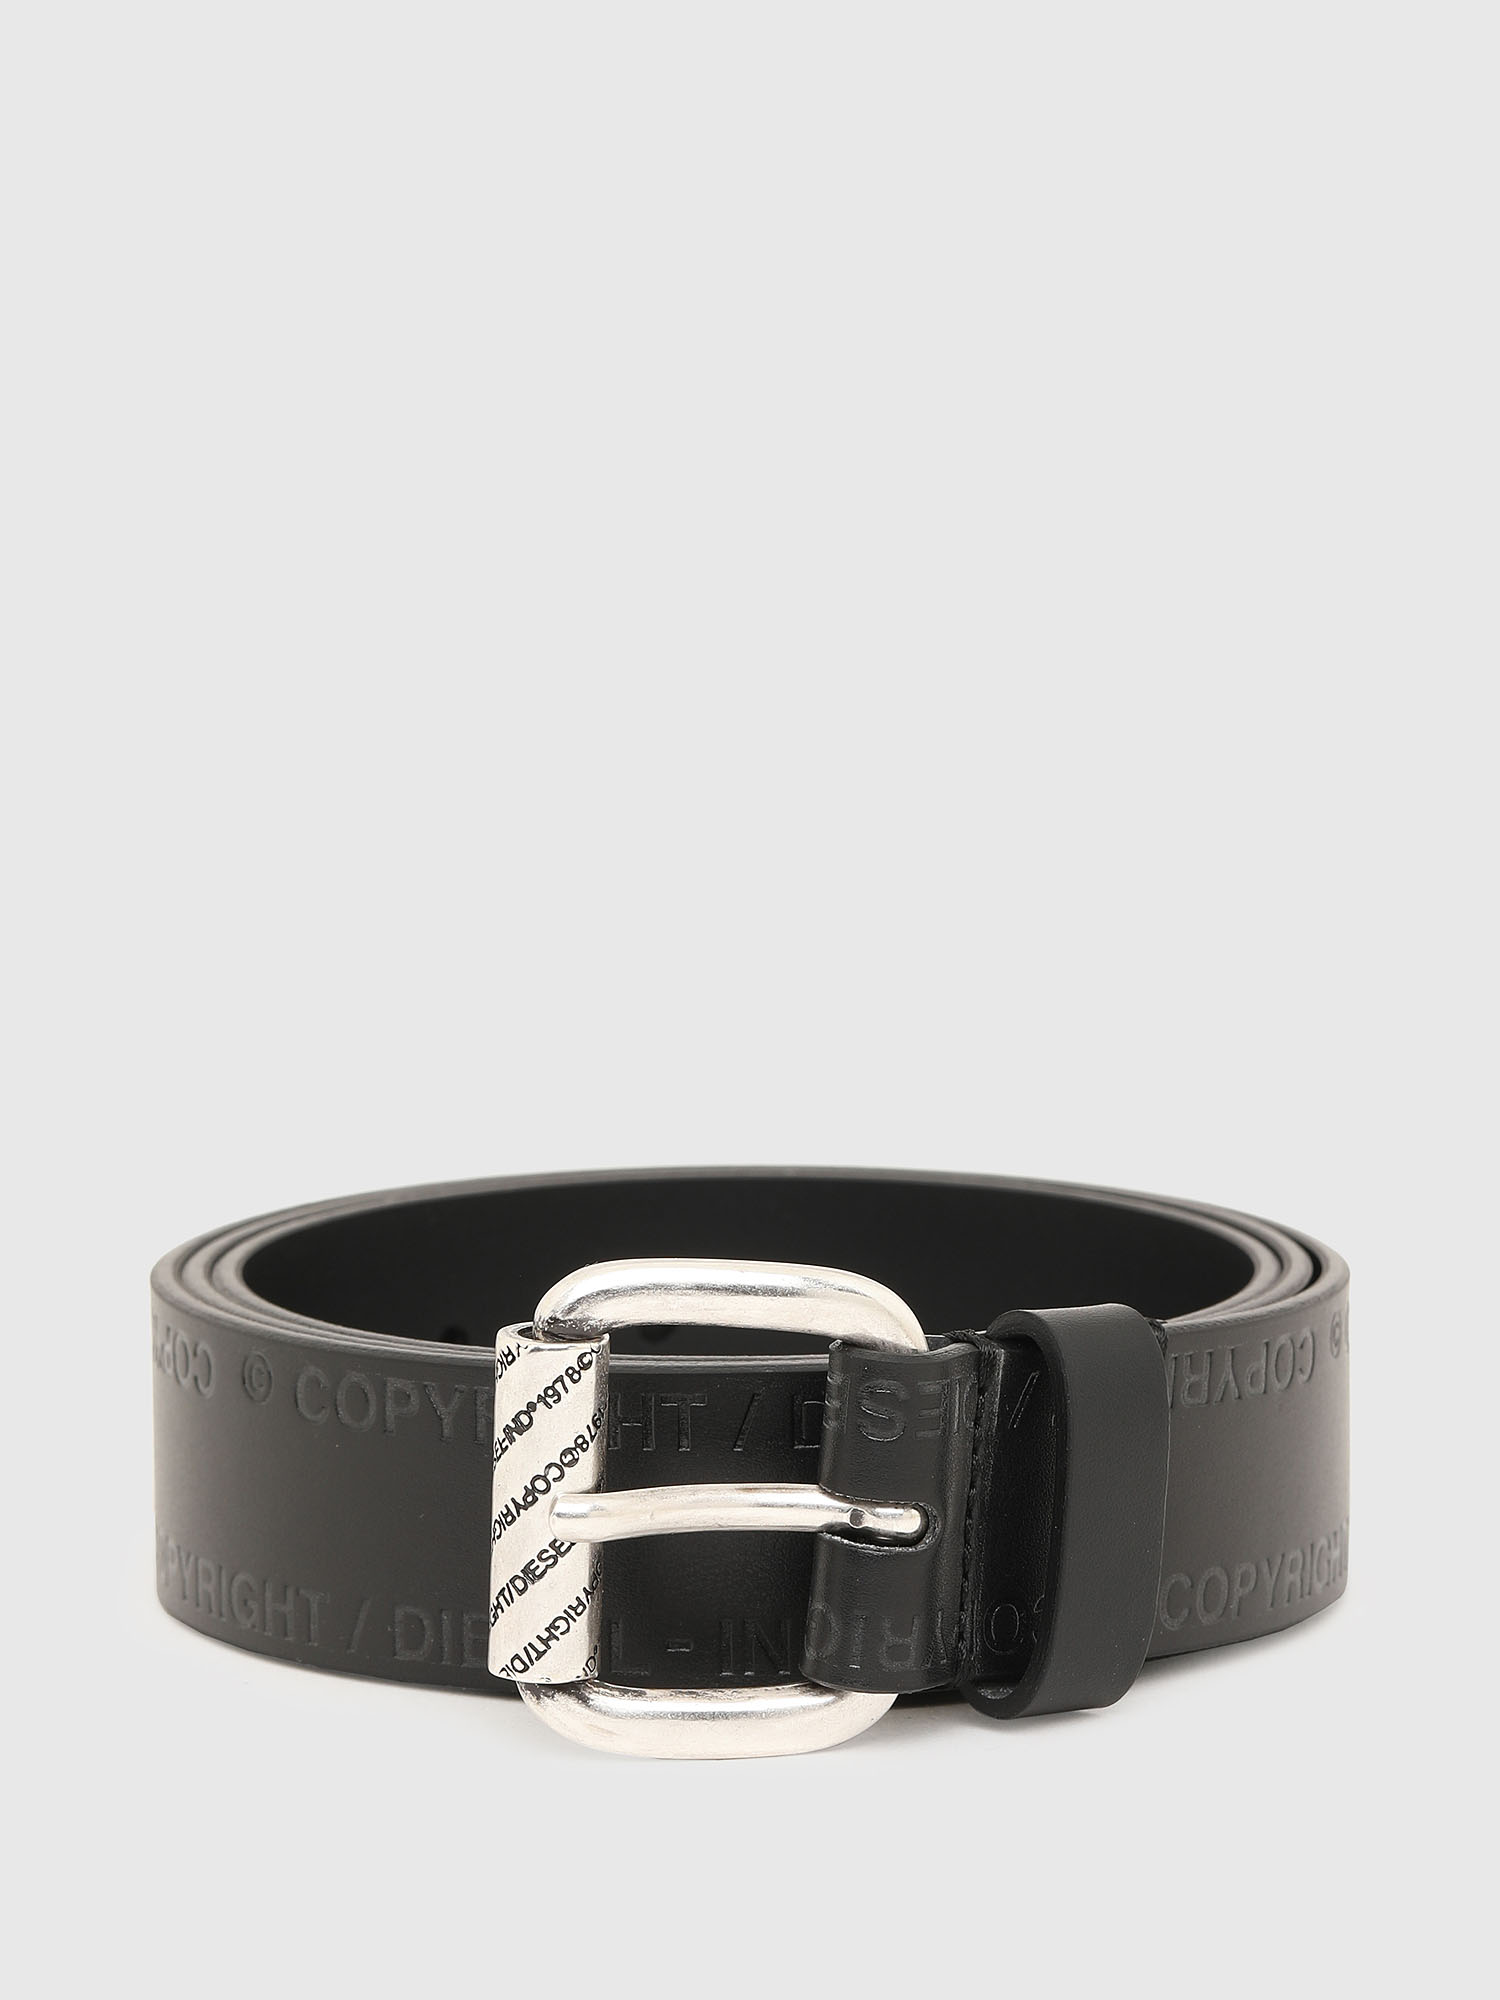 B-FULCOPY Man: Faux leather belt with Copyright logo | Diesel